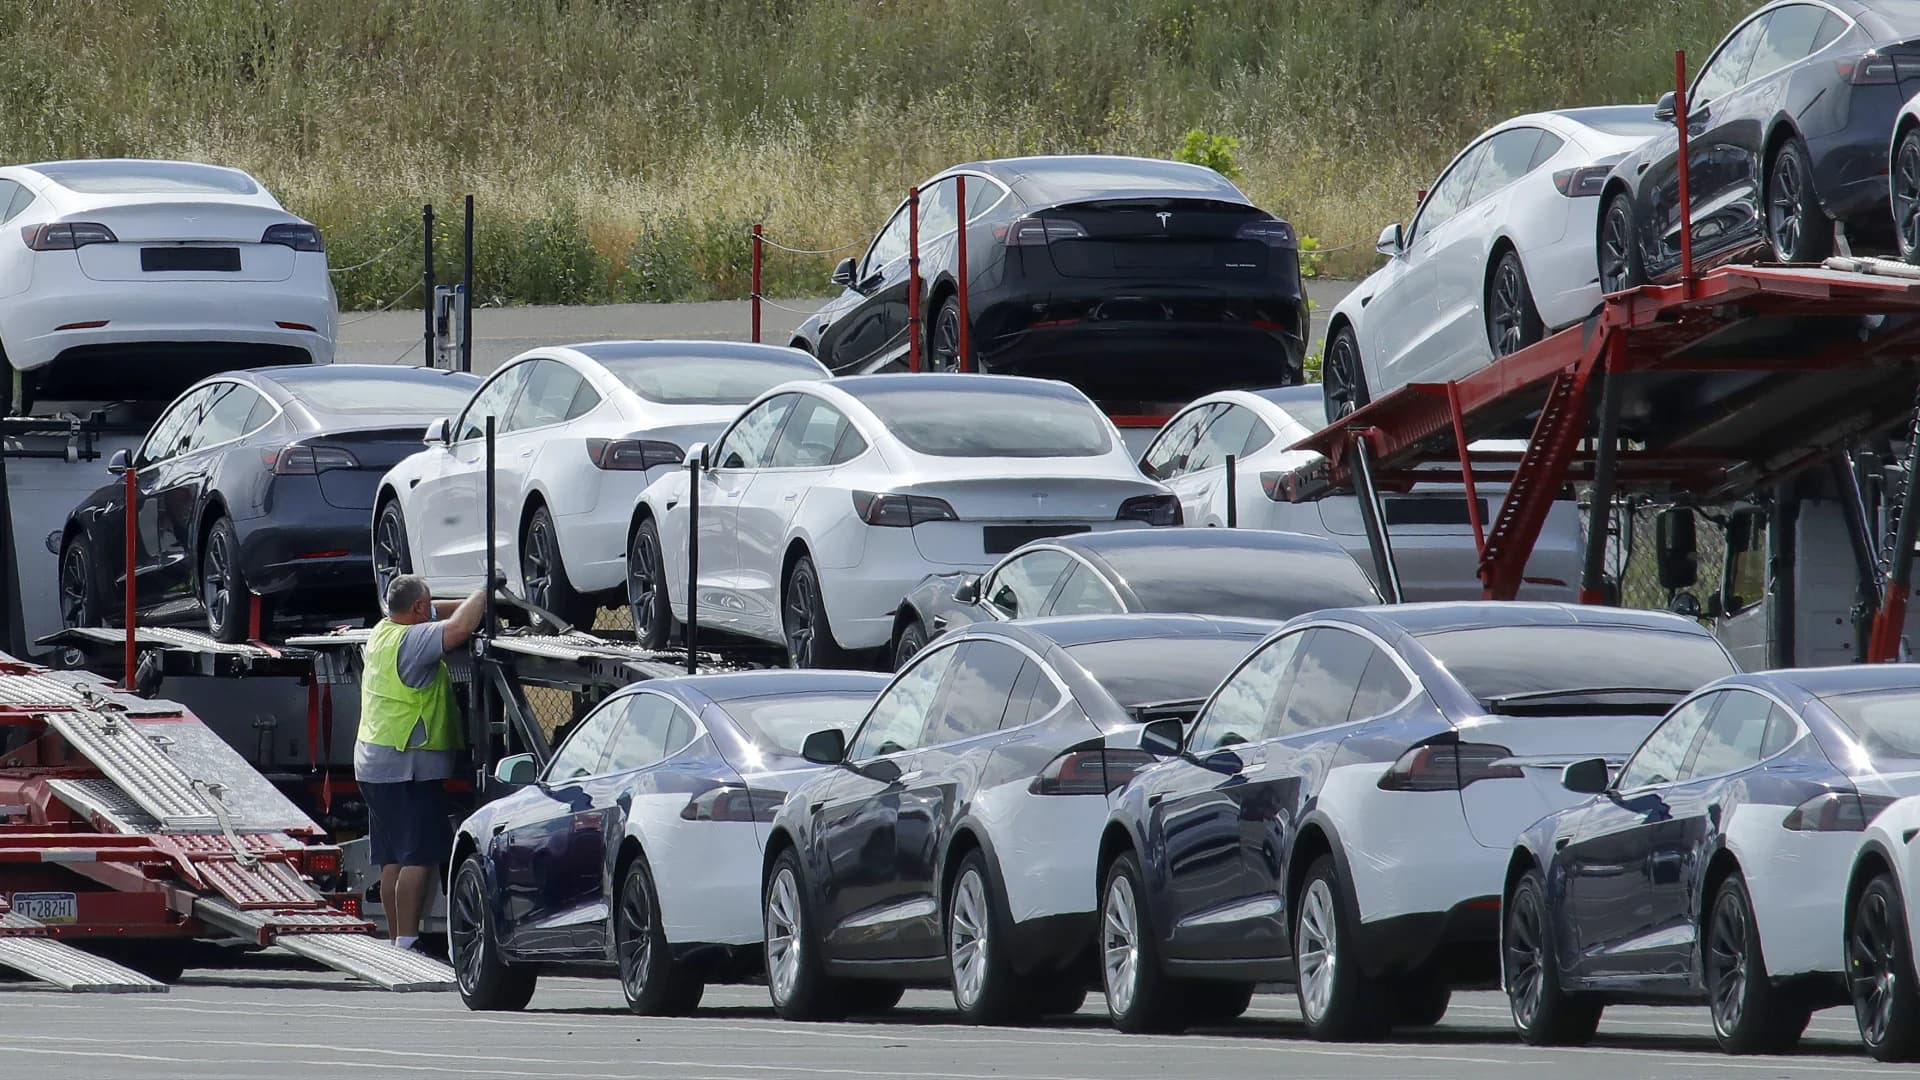 Tesla recalls 'Full Self-Driving' to fix flaws in behavior